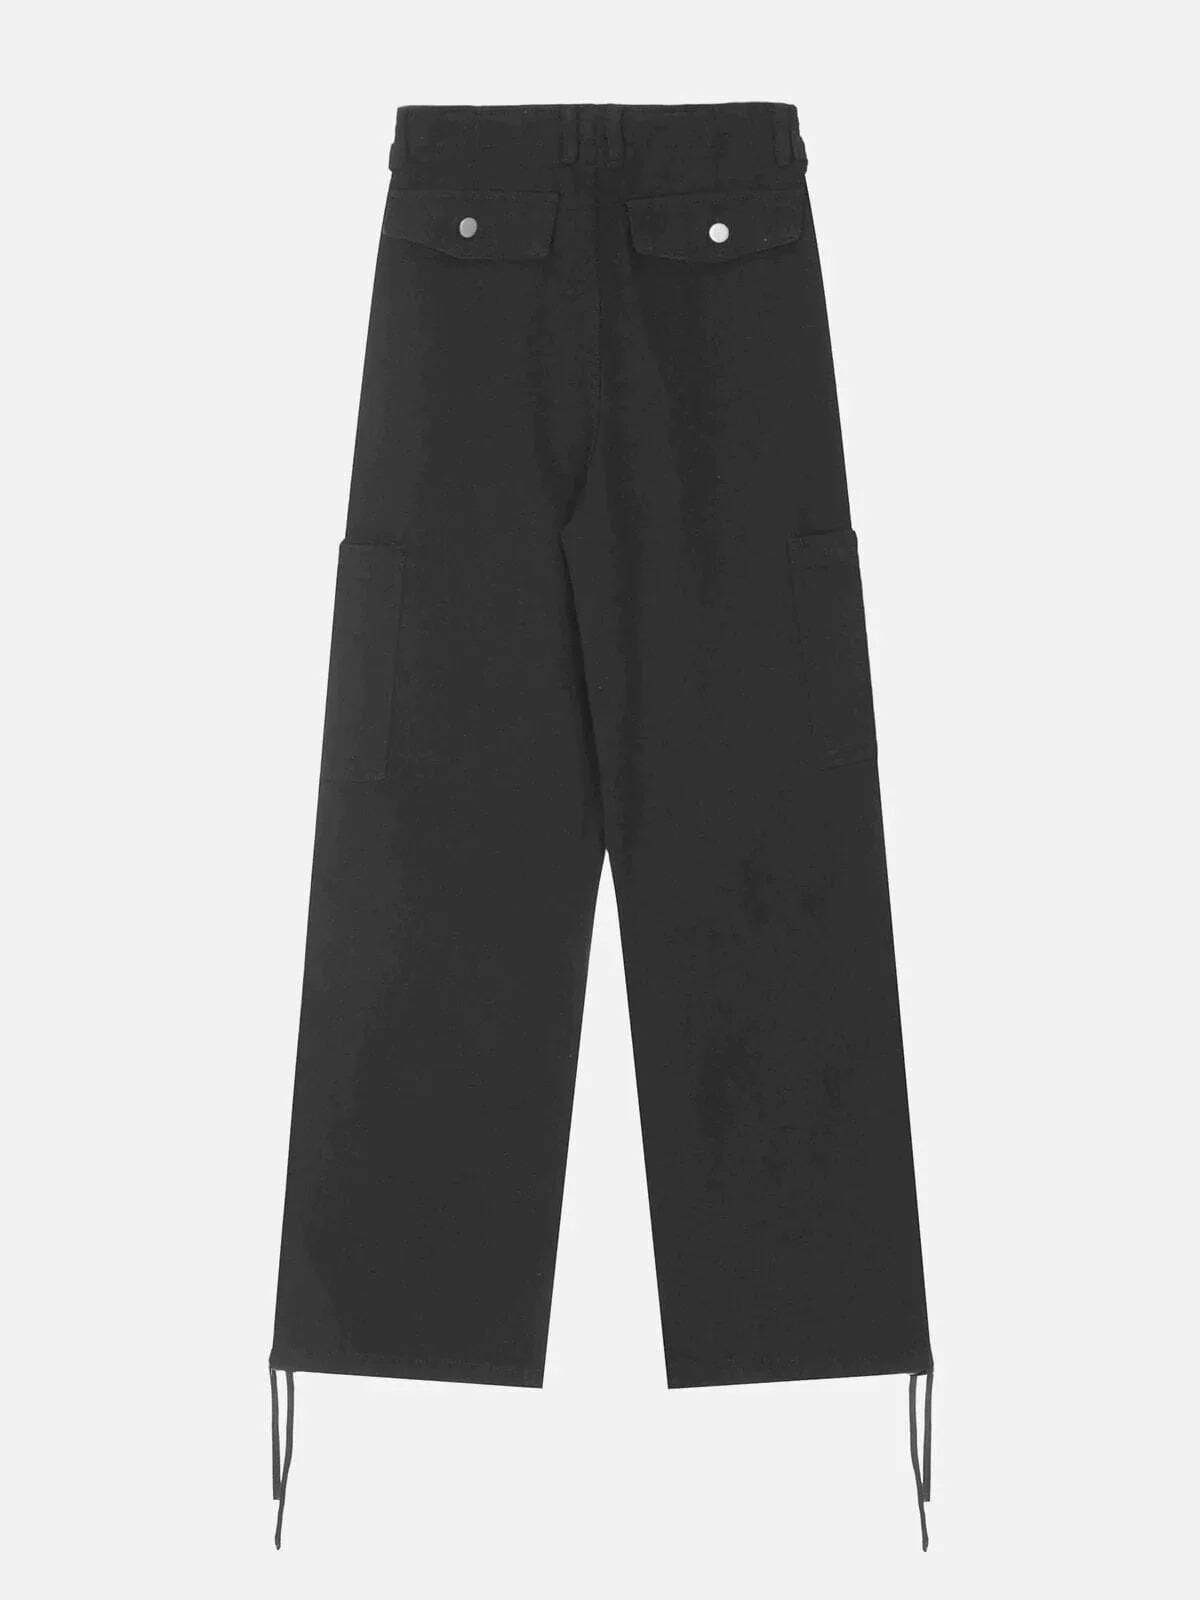 retro wideleg cargo pants edgy & functional streetwear 6988